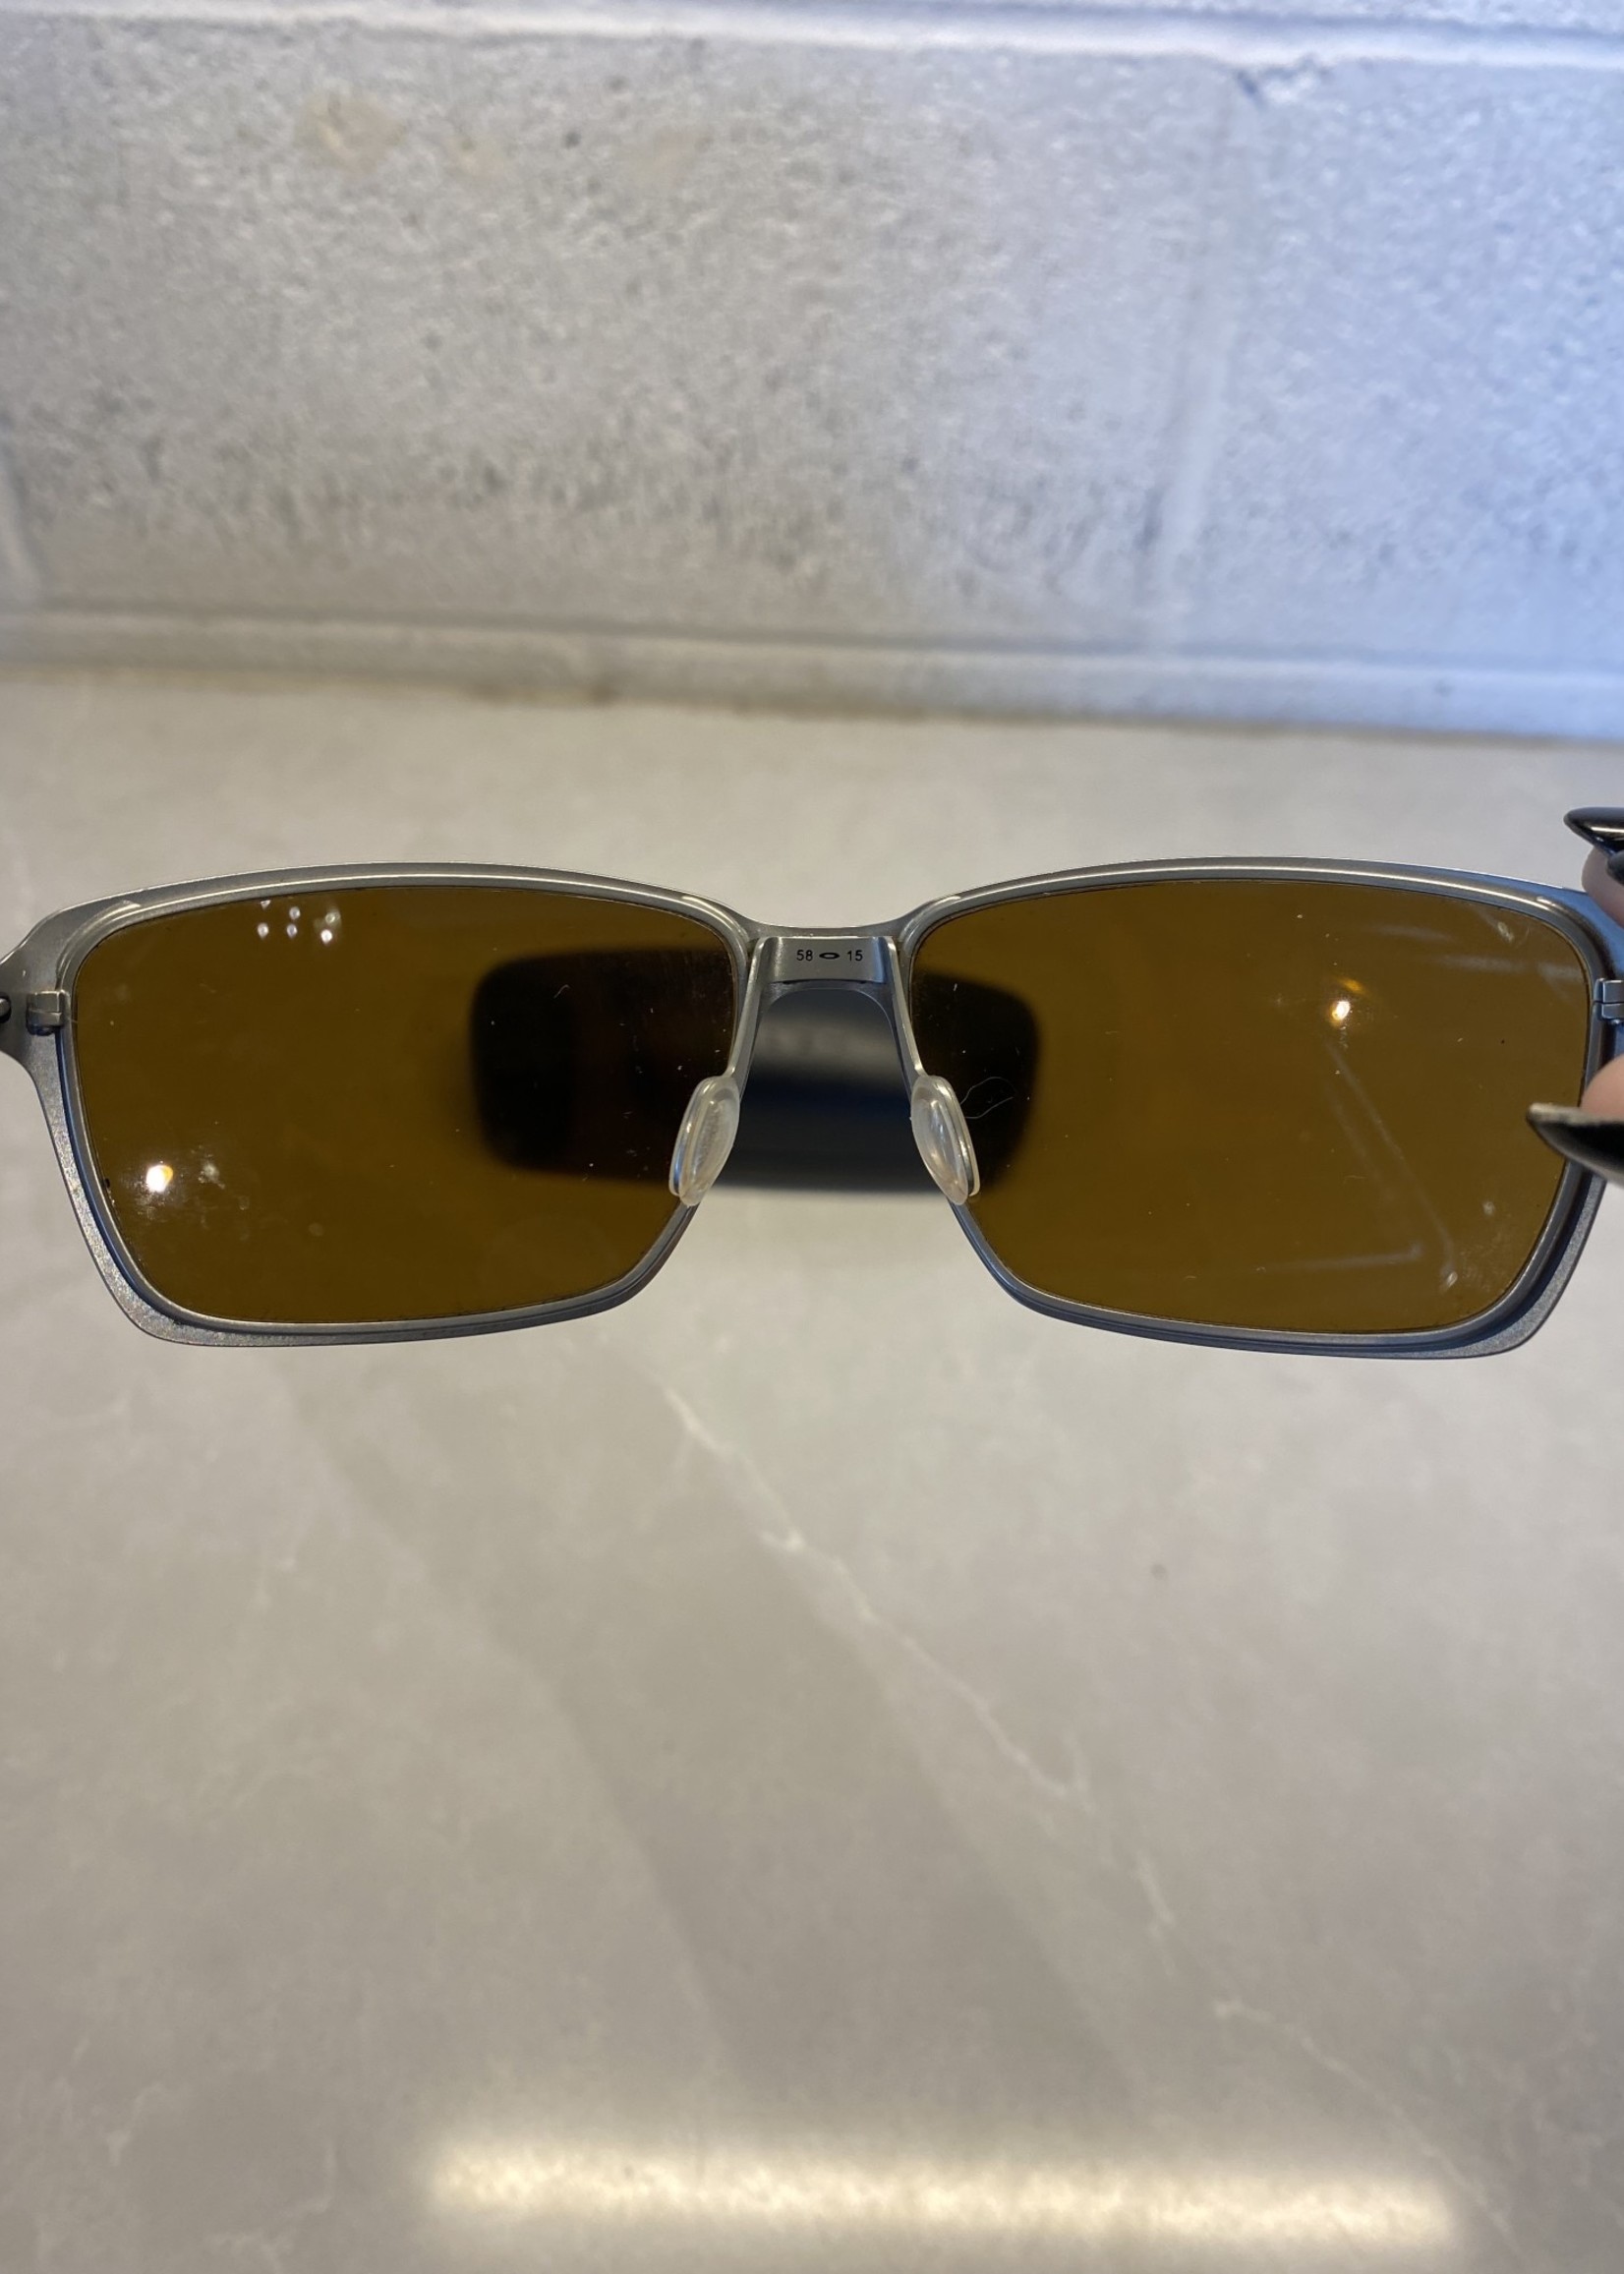 Oakley Tincan Sunglasses